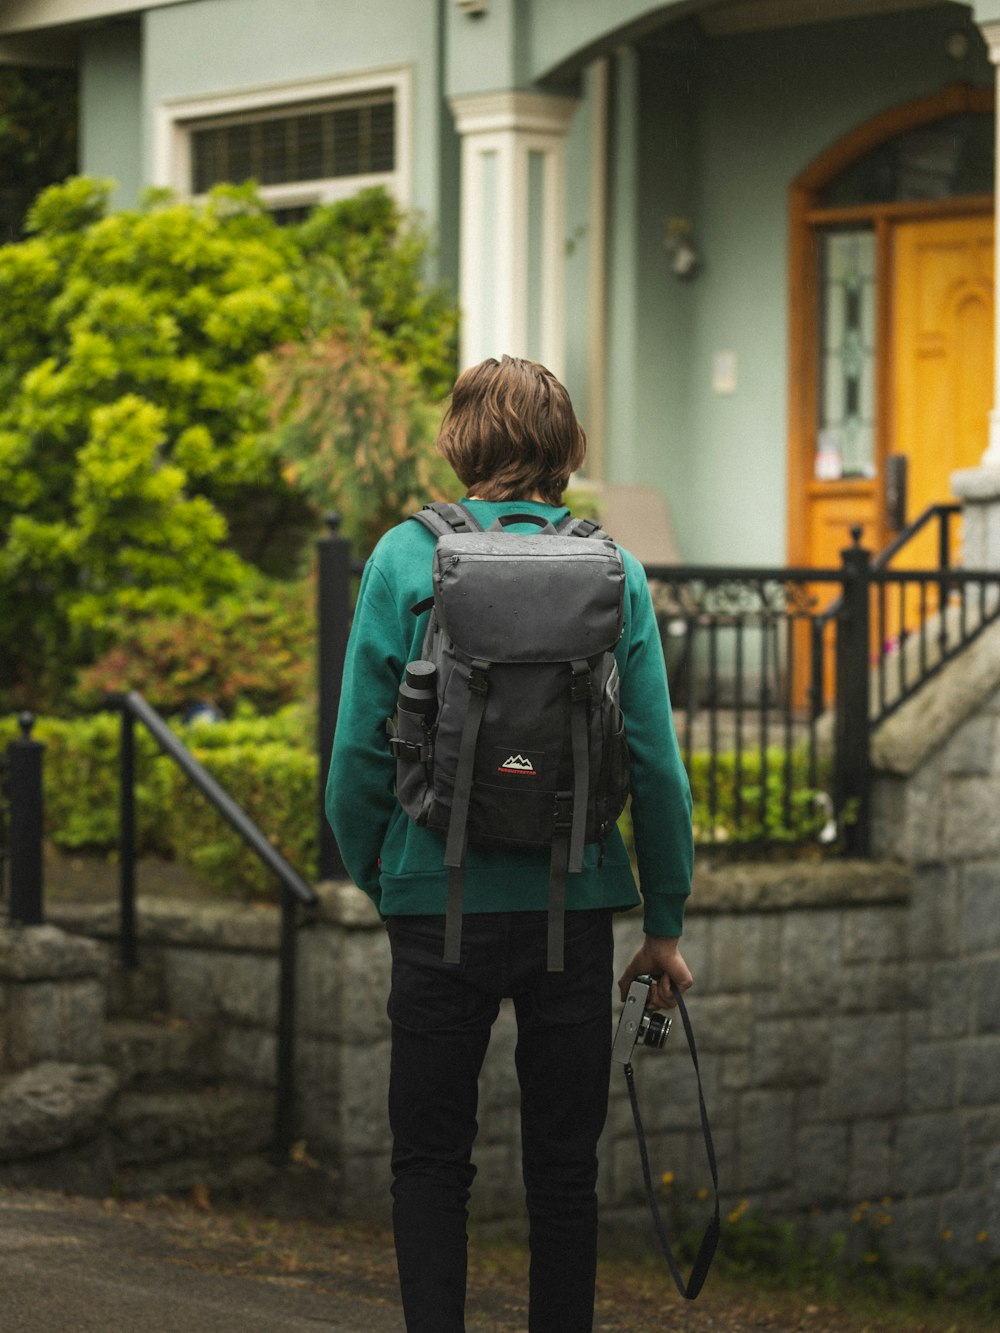 boy in green and black backpack walking on sidewalk during daytime